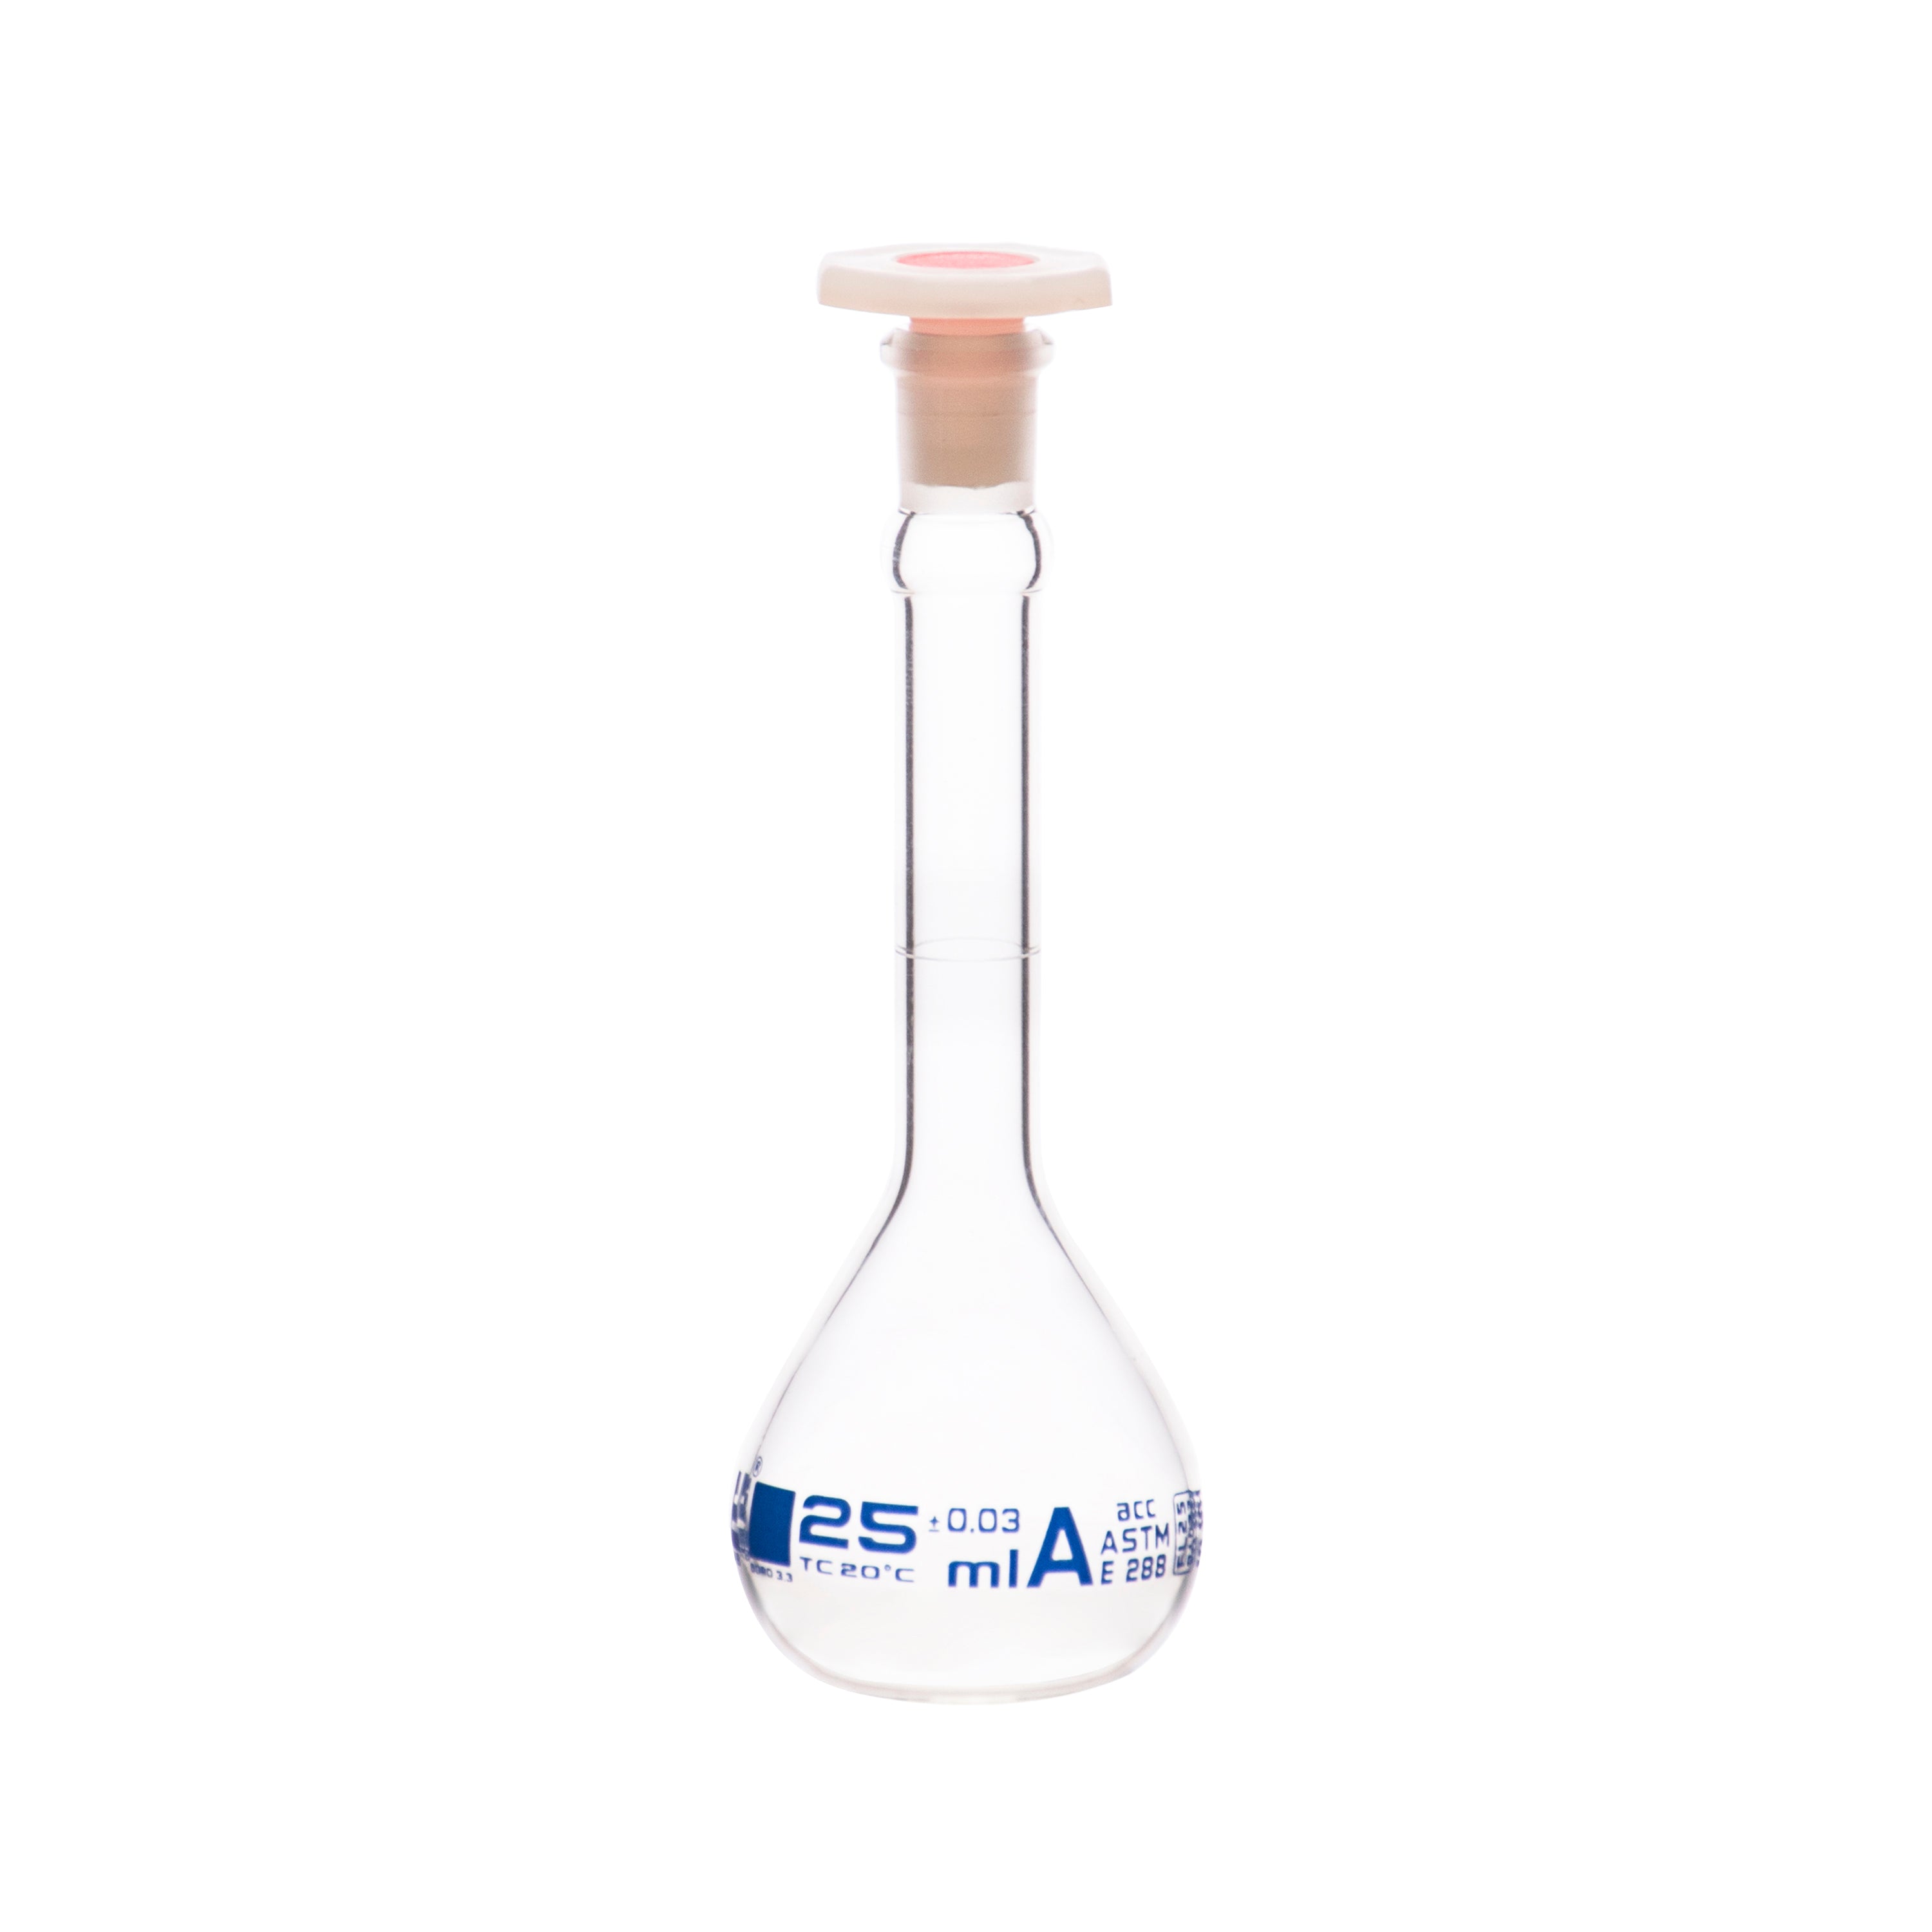 Borosilicate Volumetric Flask with Polyethylene Stopper, 25 ml, Class A, Blue Print, ASTM, Autoclavable